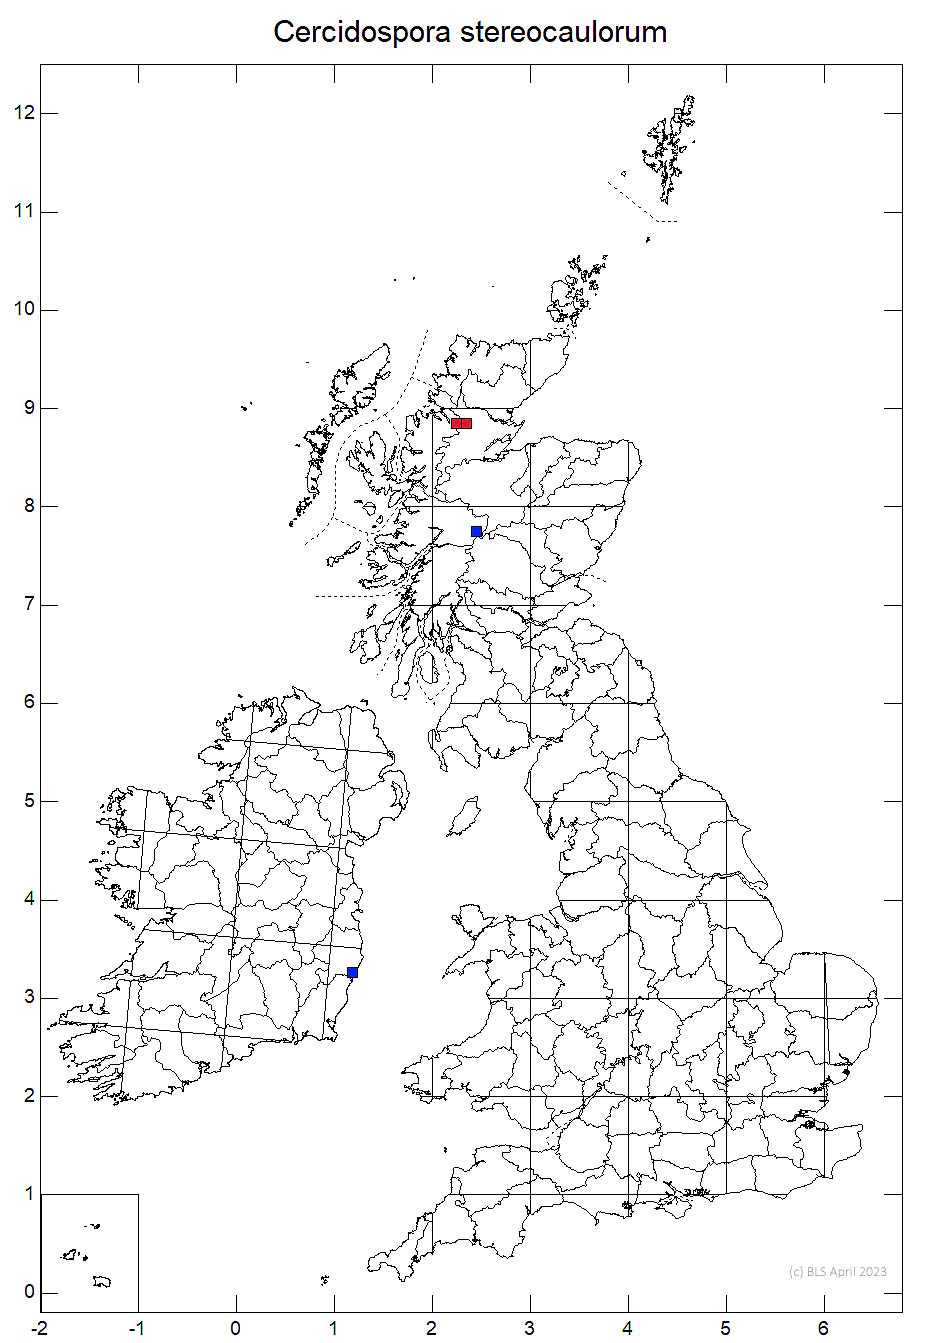 Cercidospora stereocaulorum 10km sq distribution map